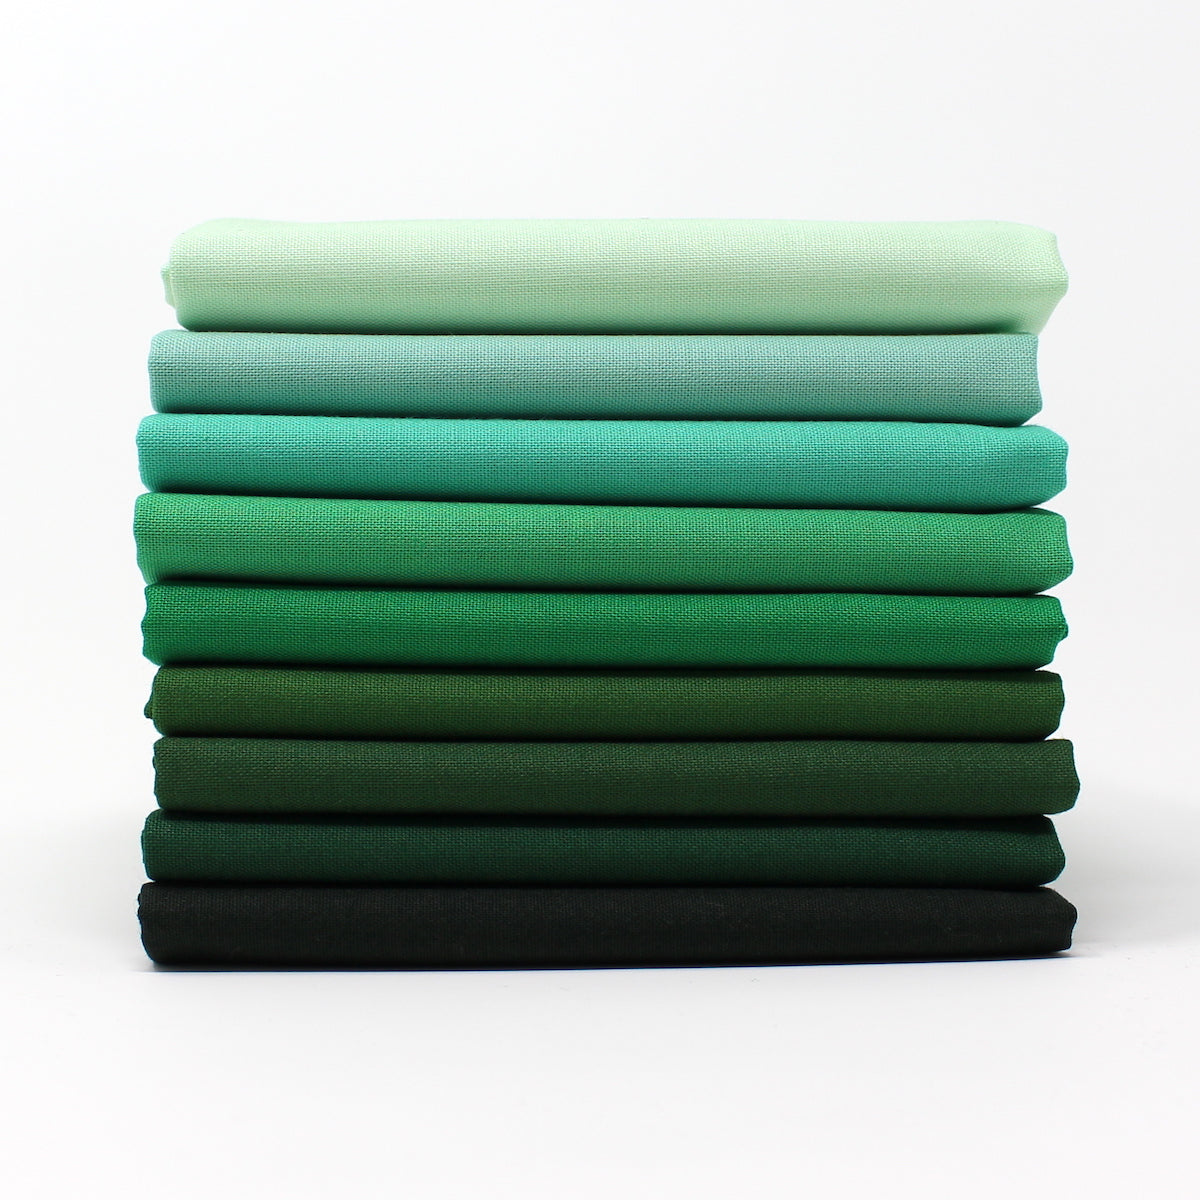 Hanjunzhao Green Solids Fat Quarters Fabric Bundles, Precut Quilting Sewing  Fabric, 18 x 22 inches